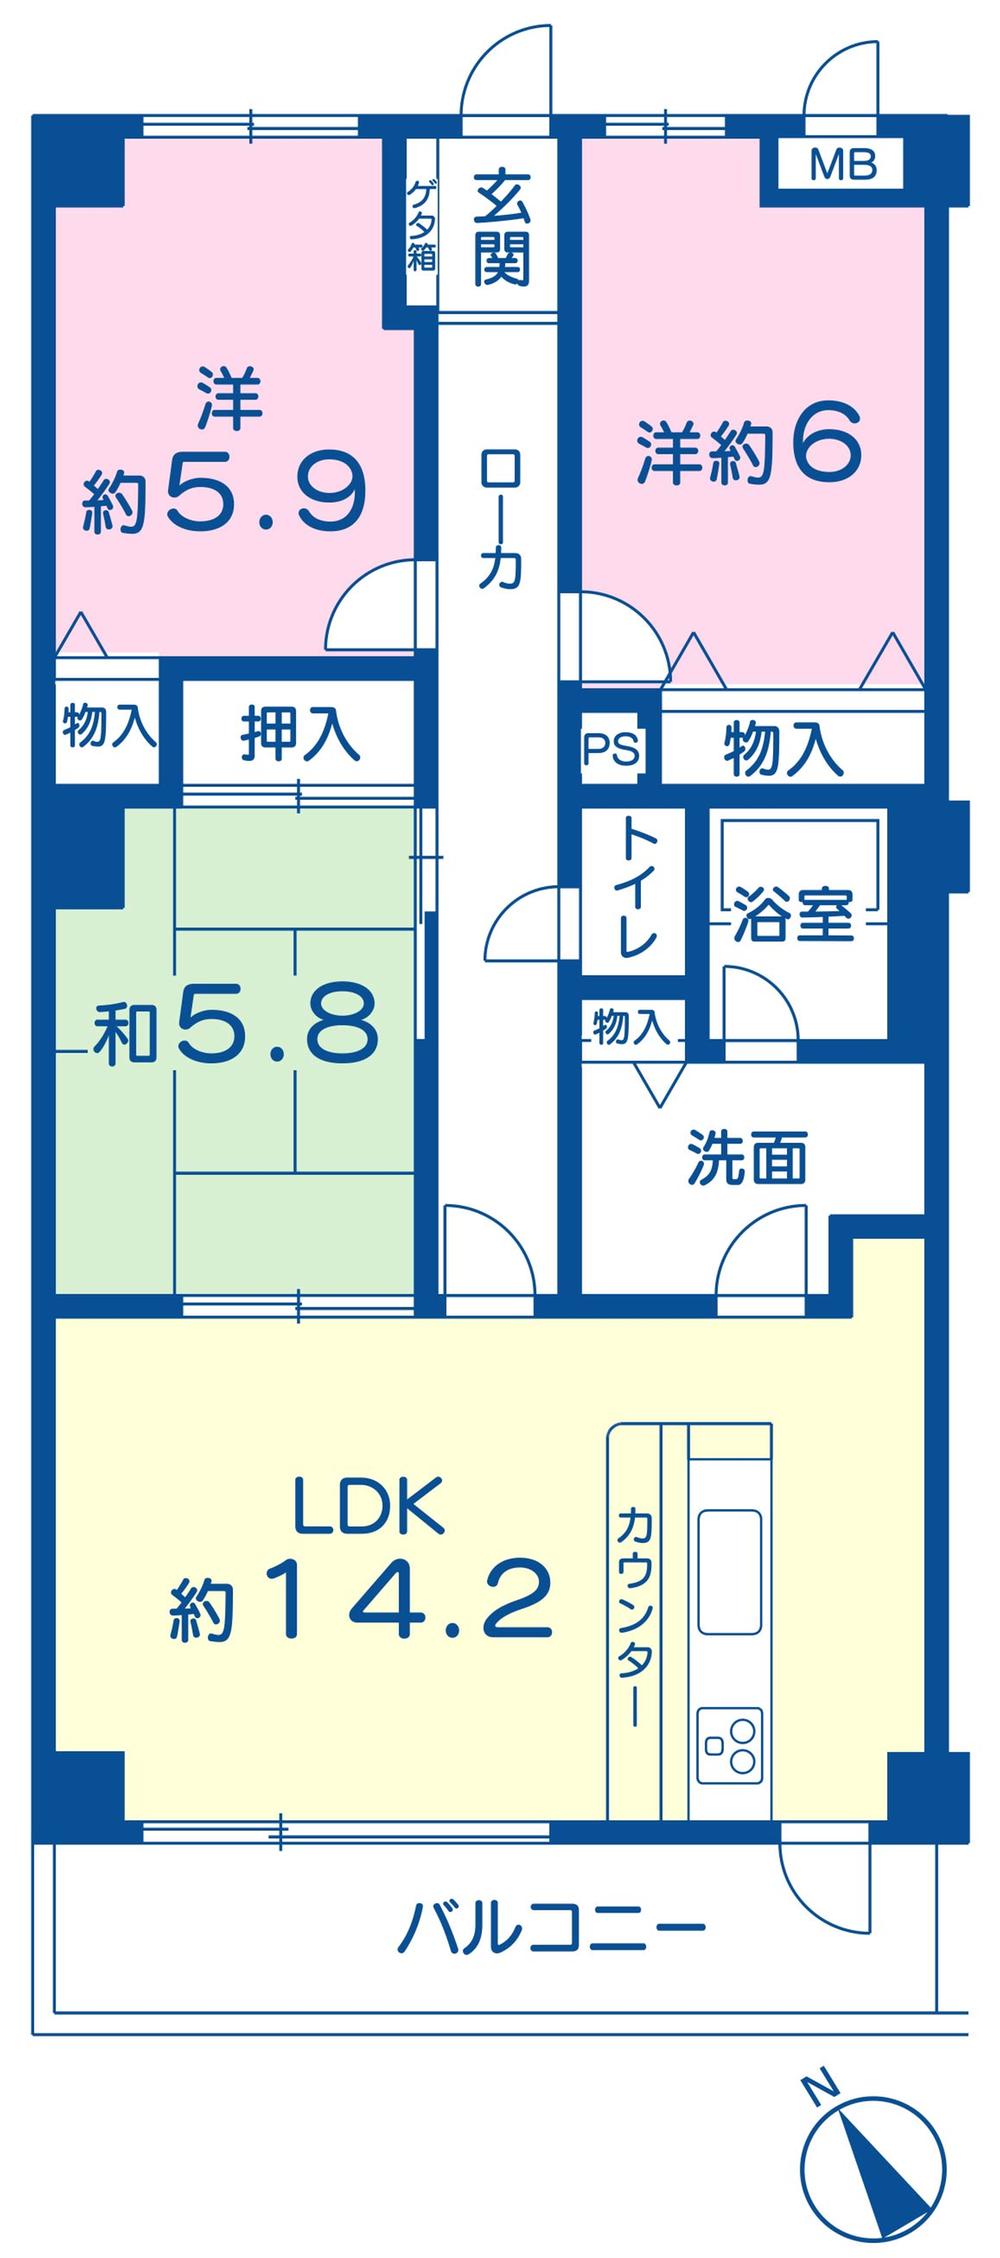 Floor plan. 3LDK, Price 9.8 million yen, Footprint 76.8 sq m , Balcony area 9.6 sq m 3LDK